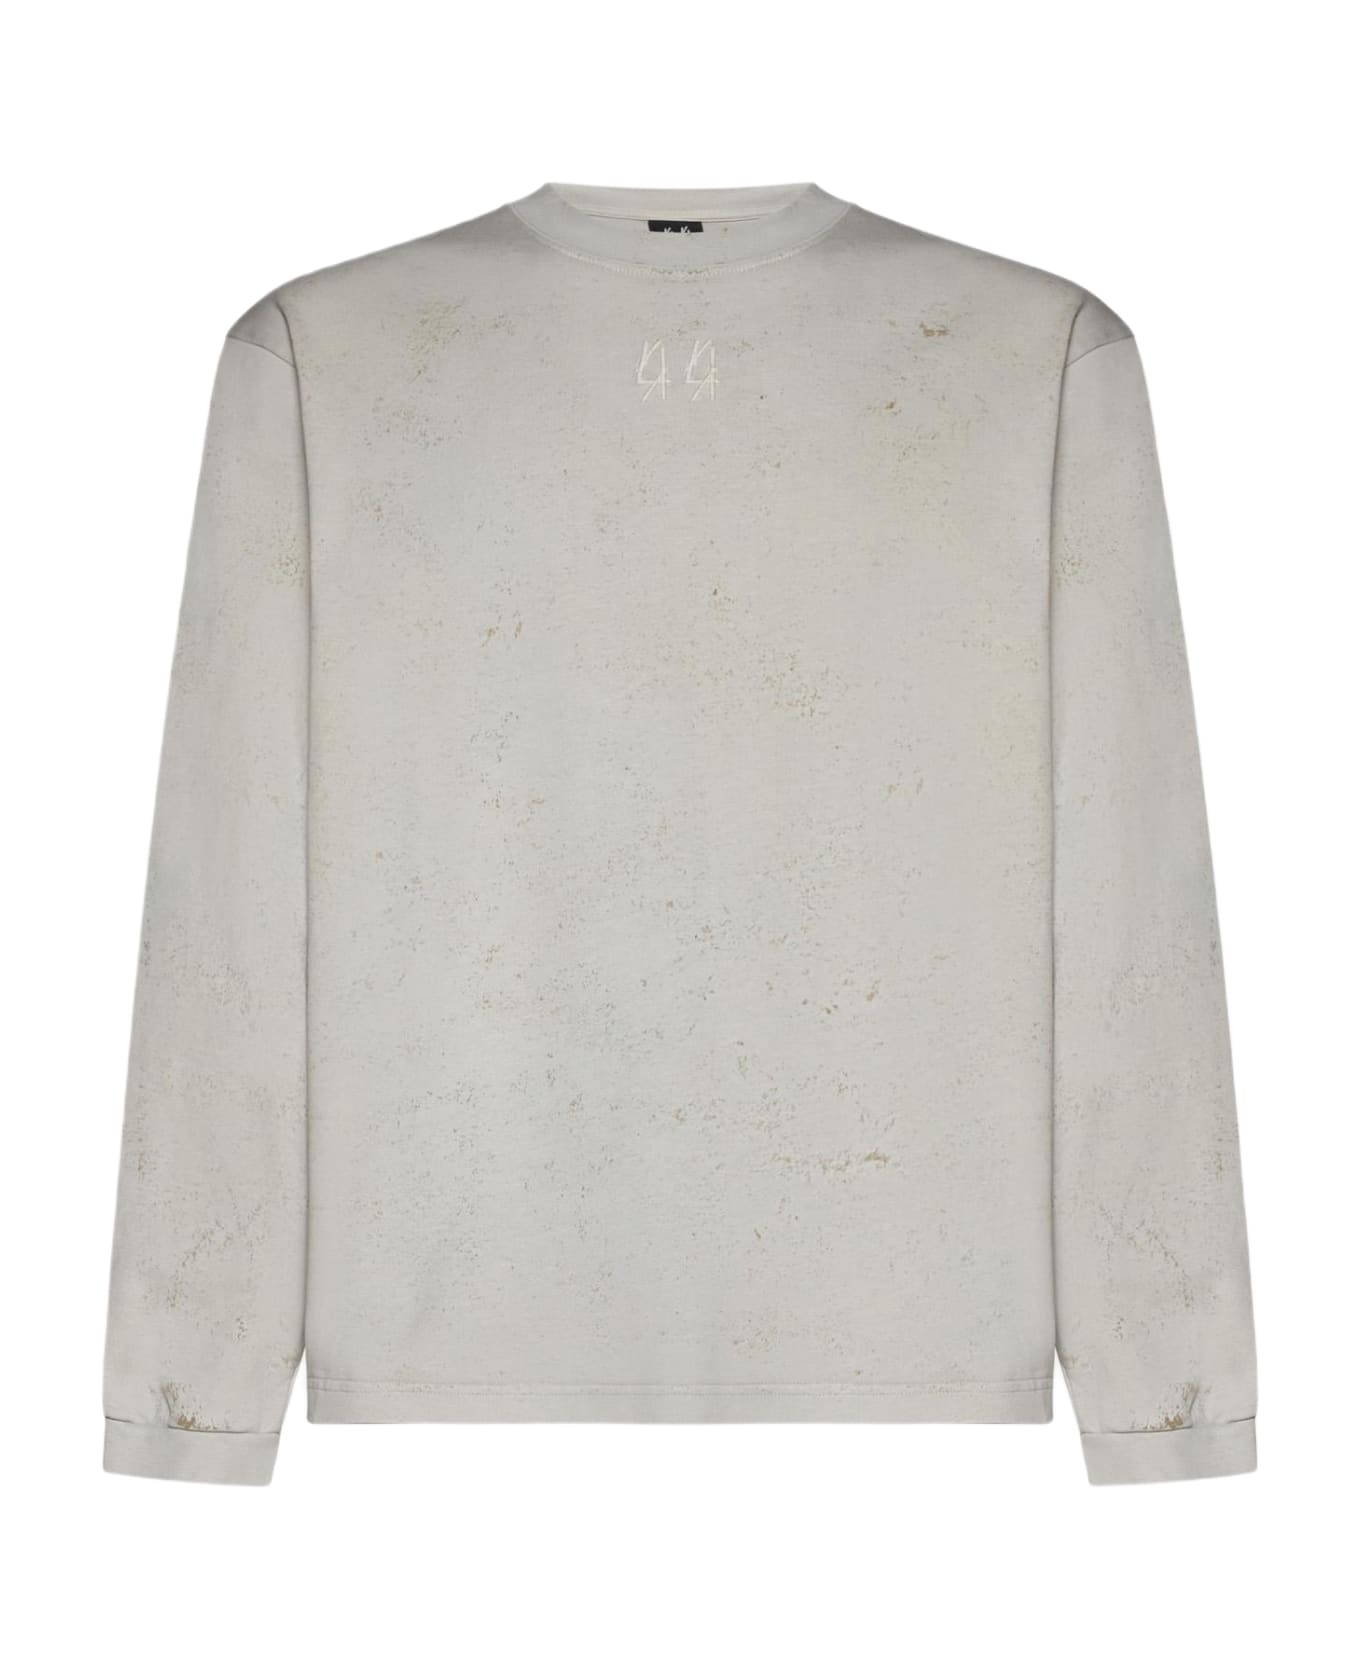 44 Label Group Back Holes Cotton Sweatshirt